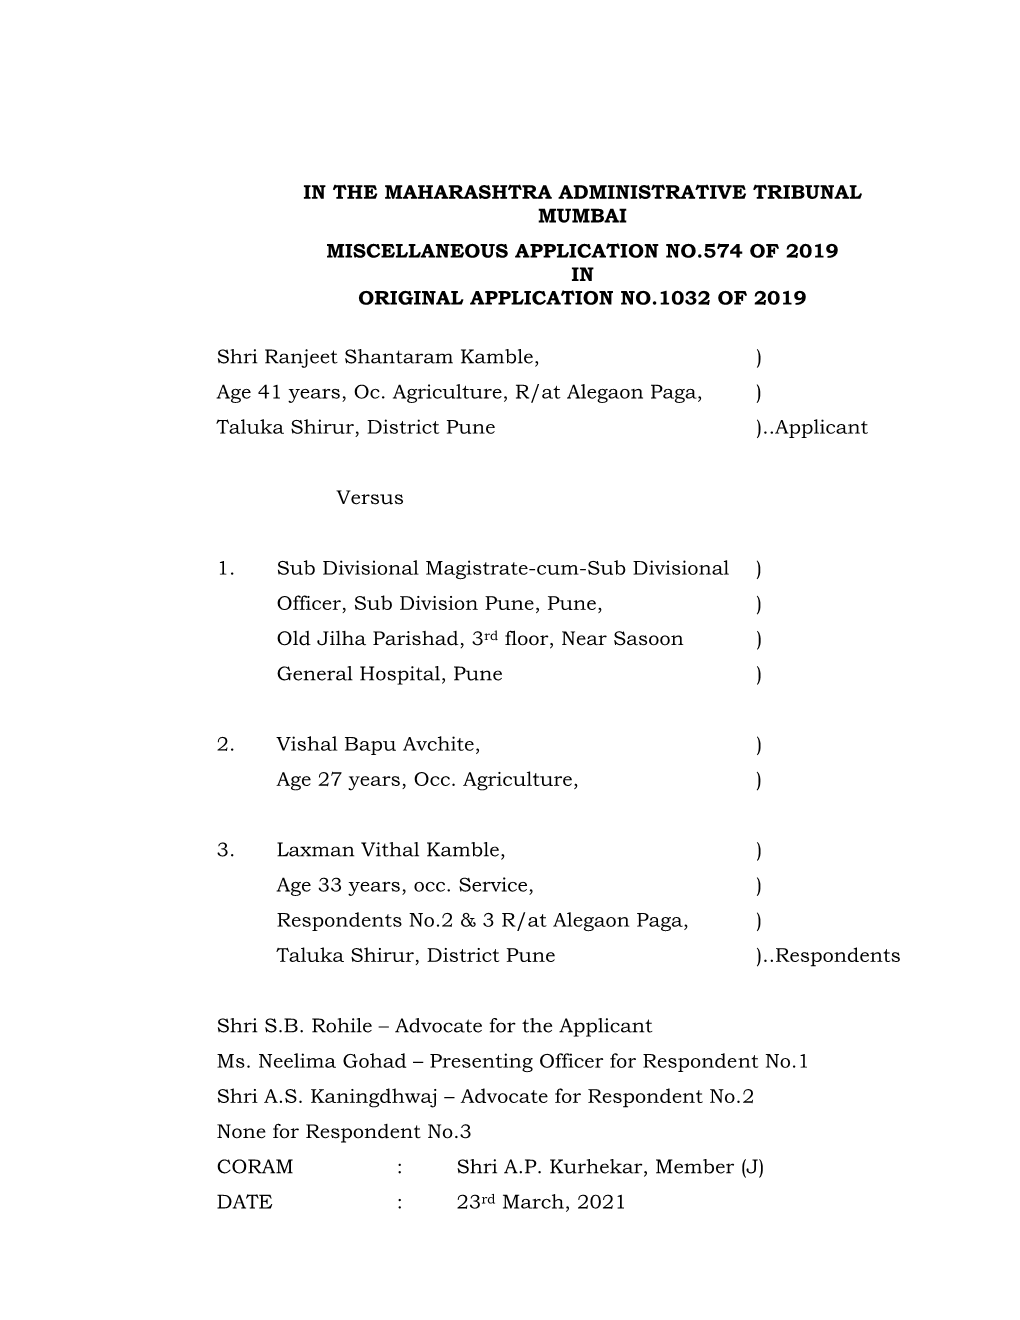 In the Maharashtra Administrative Tribunal Mumbai Miscellaneous Application No.574 of 2019 in Original Application No.1032 of 2019